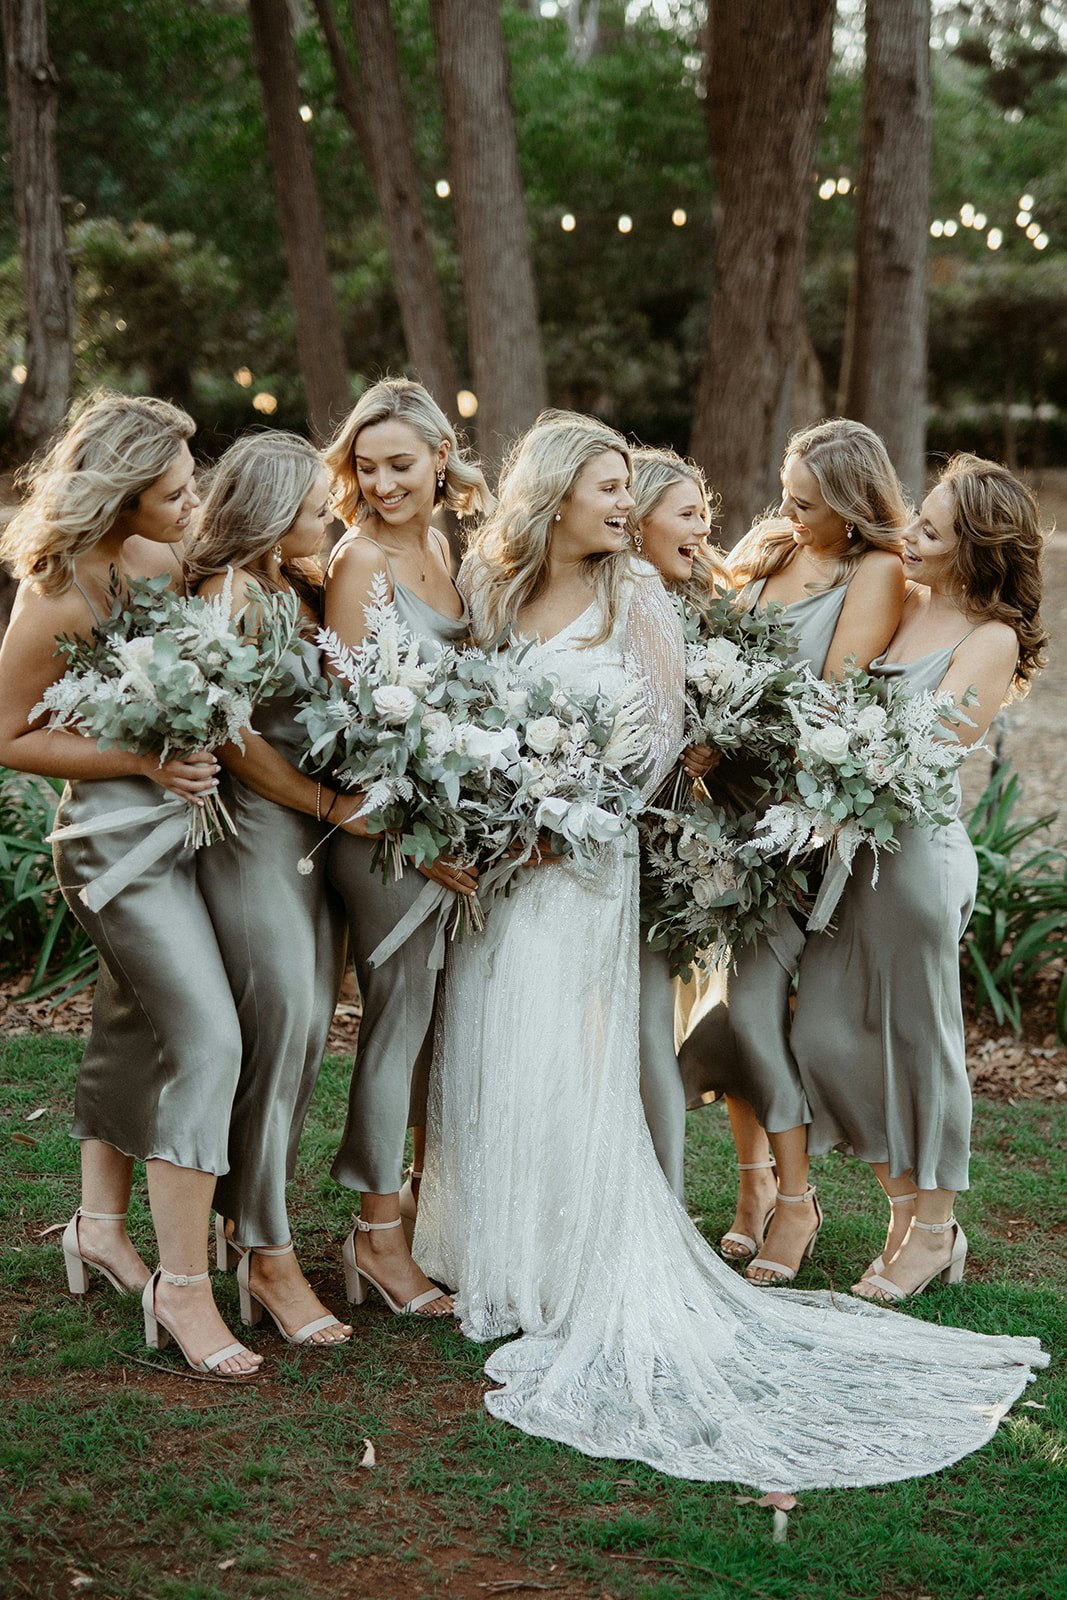 Bride and bridesmaids laugh